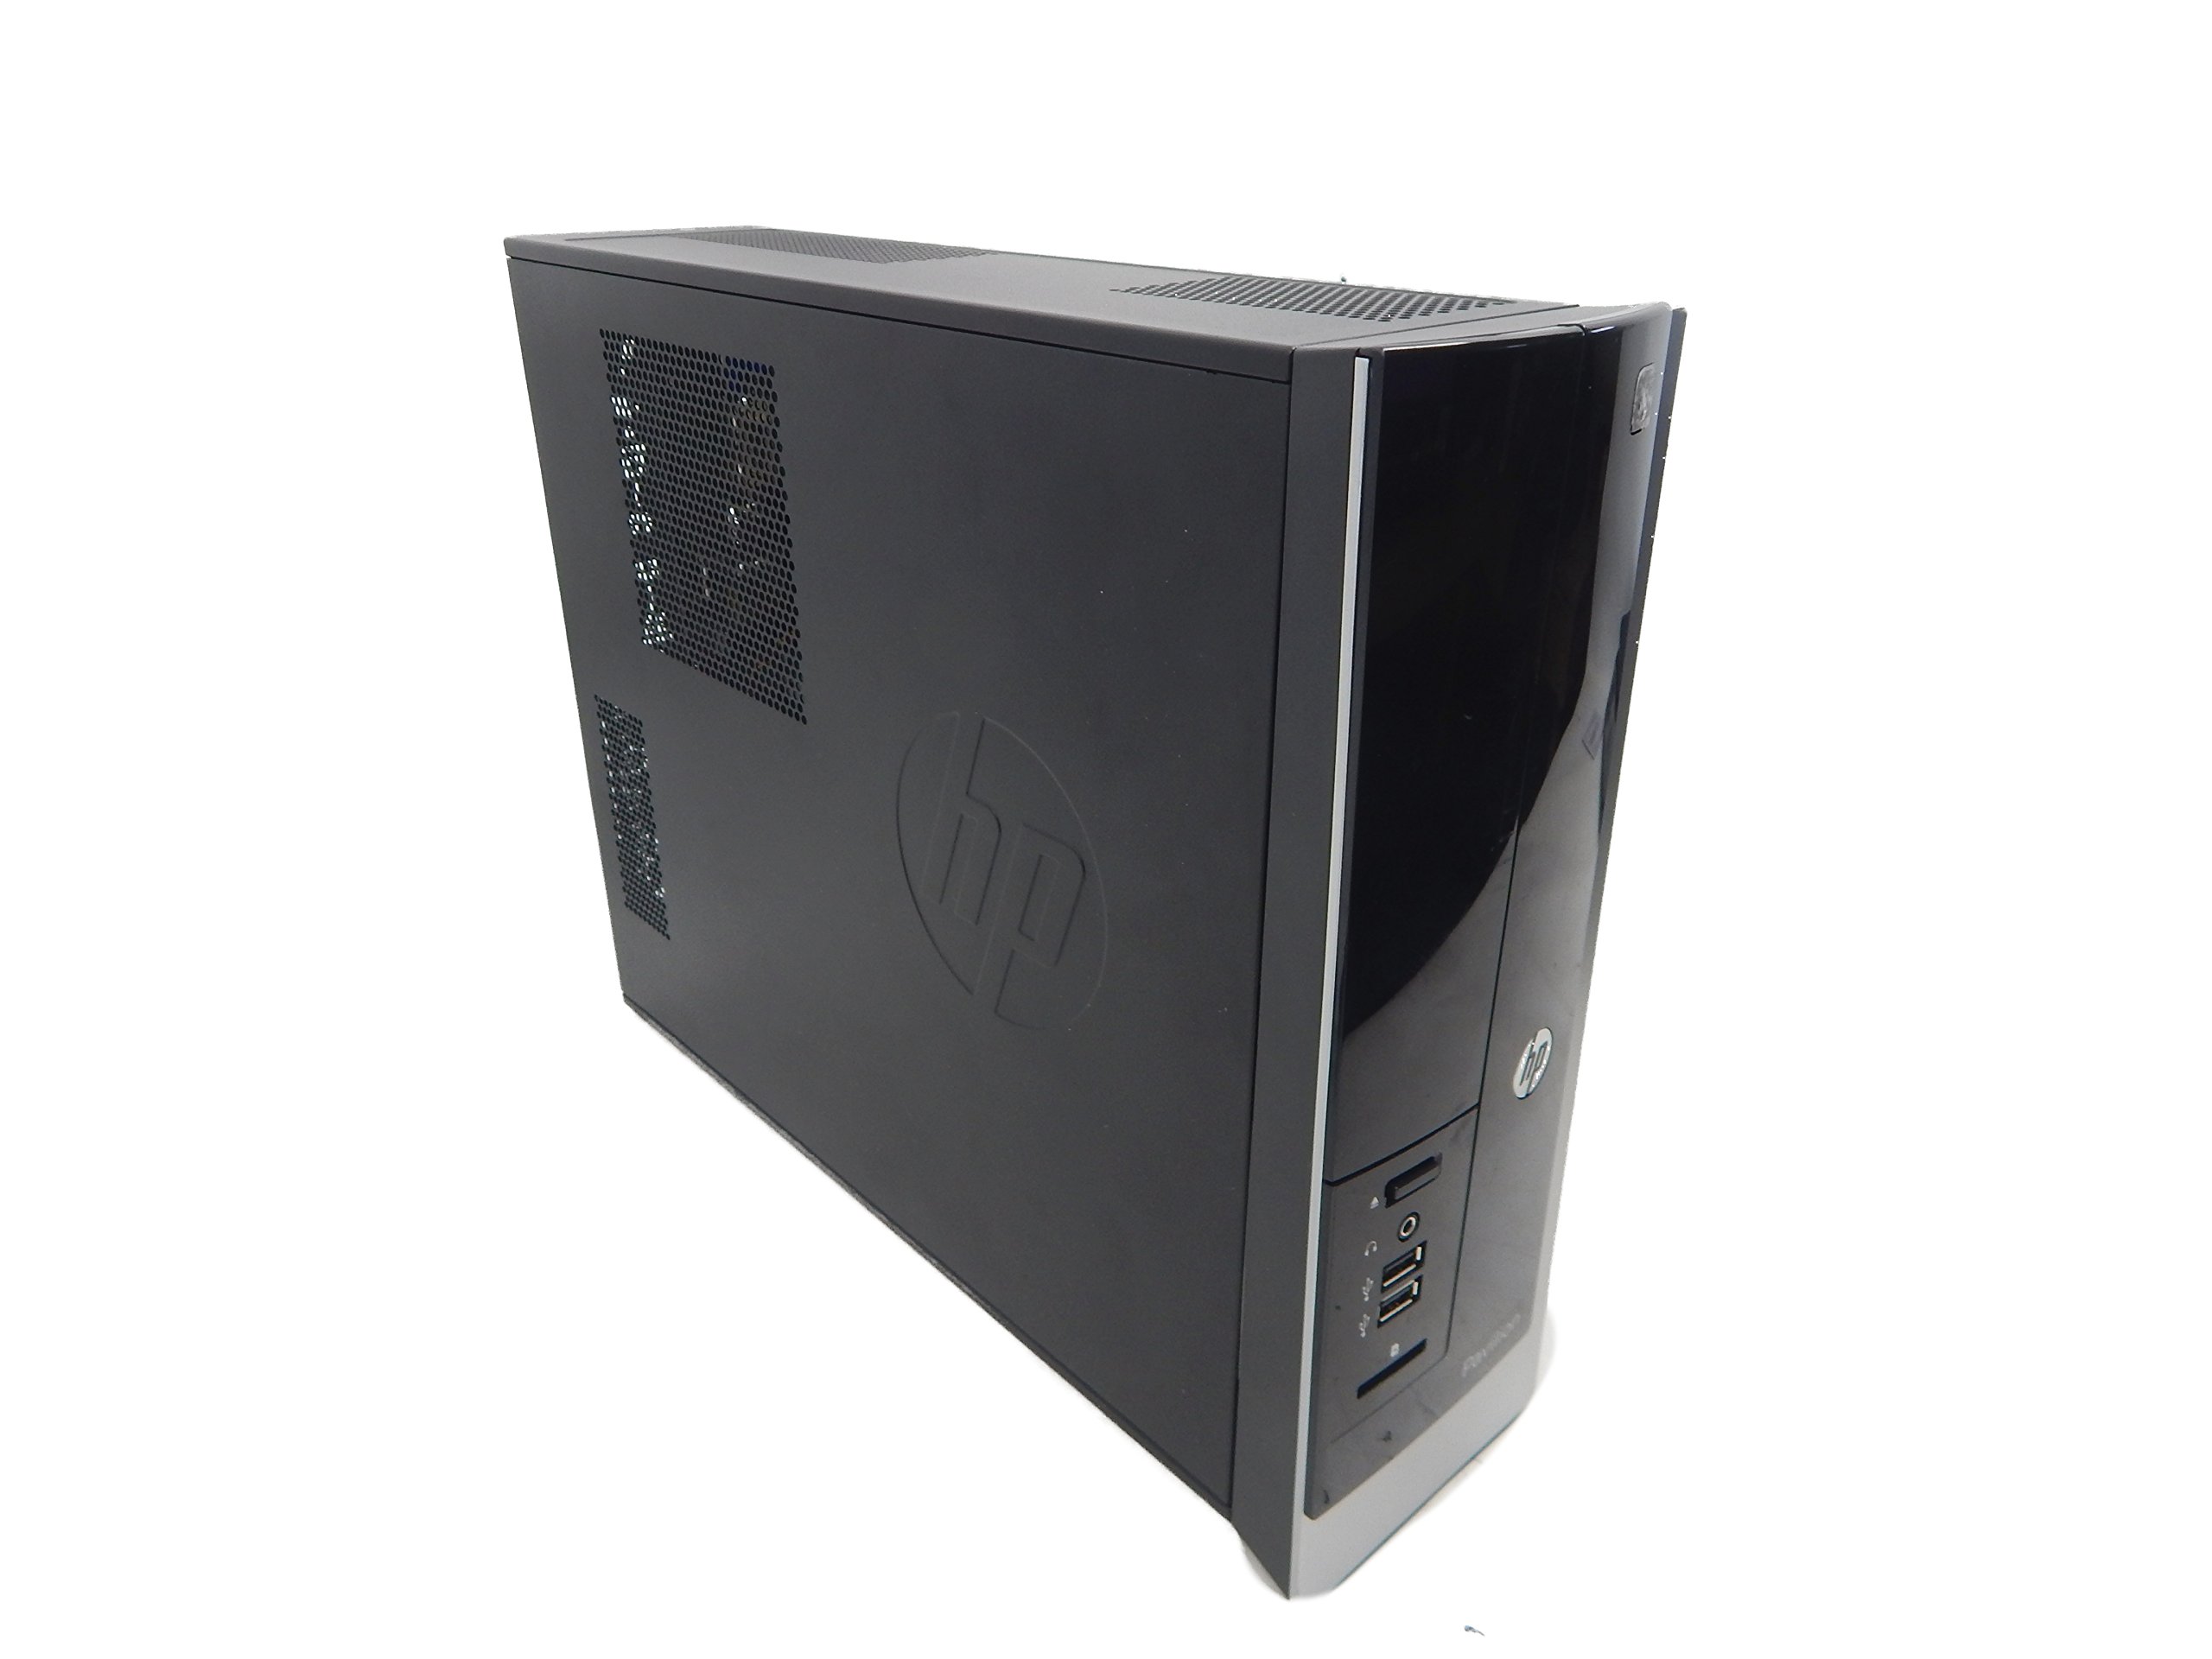 HP Pavilion Slimline Desktop PC - AMD E1-2500 (1.40 GHz) / 4GB Memory / 500GB Hard Drive/AMD Radeon HD 8240 / DVD±RW/CD-RW/Windows 8.1 64-bit